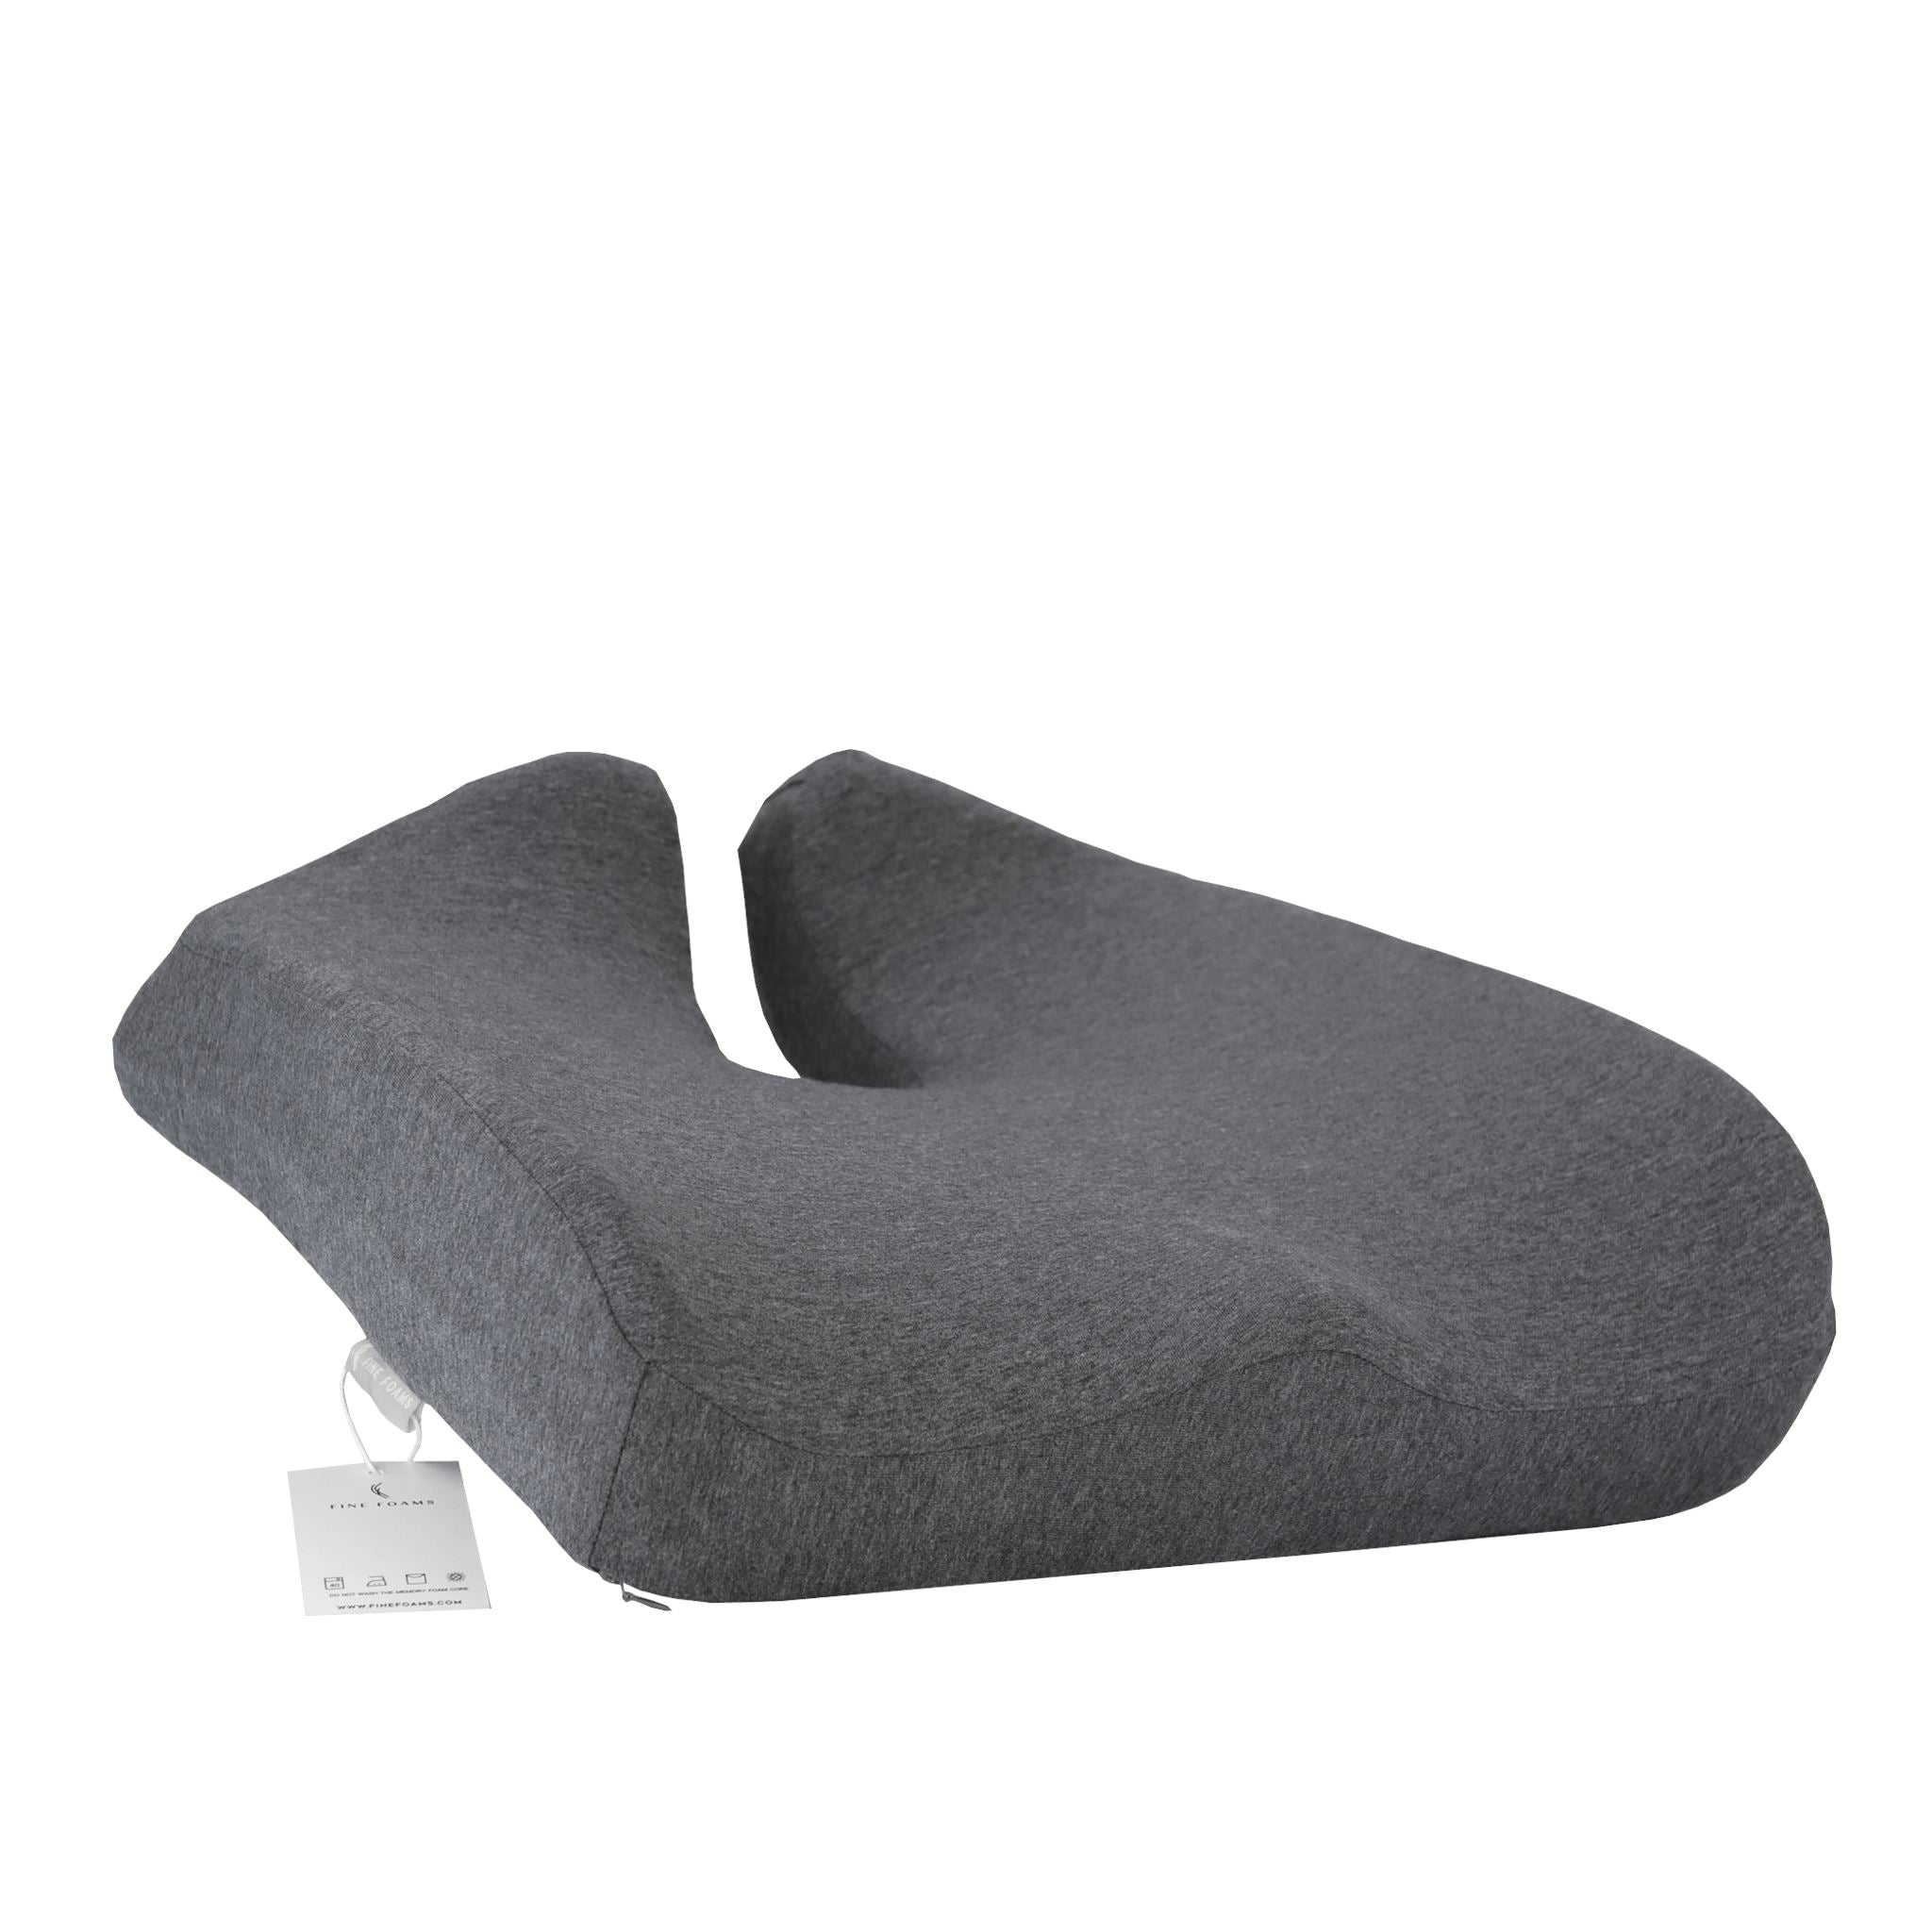 Biggie's Memory Foam Seat Cushion